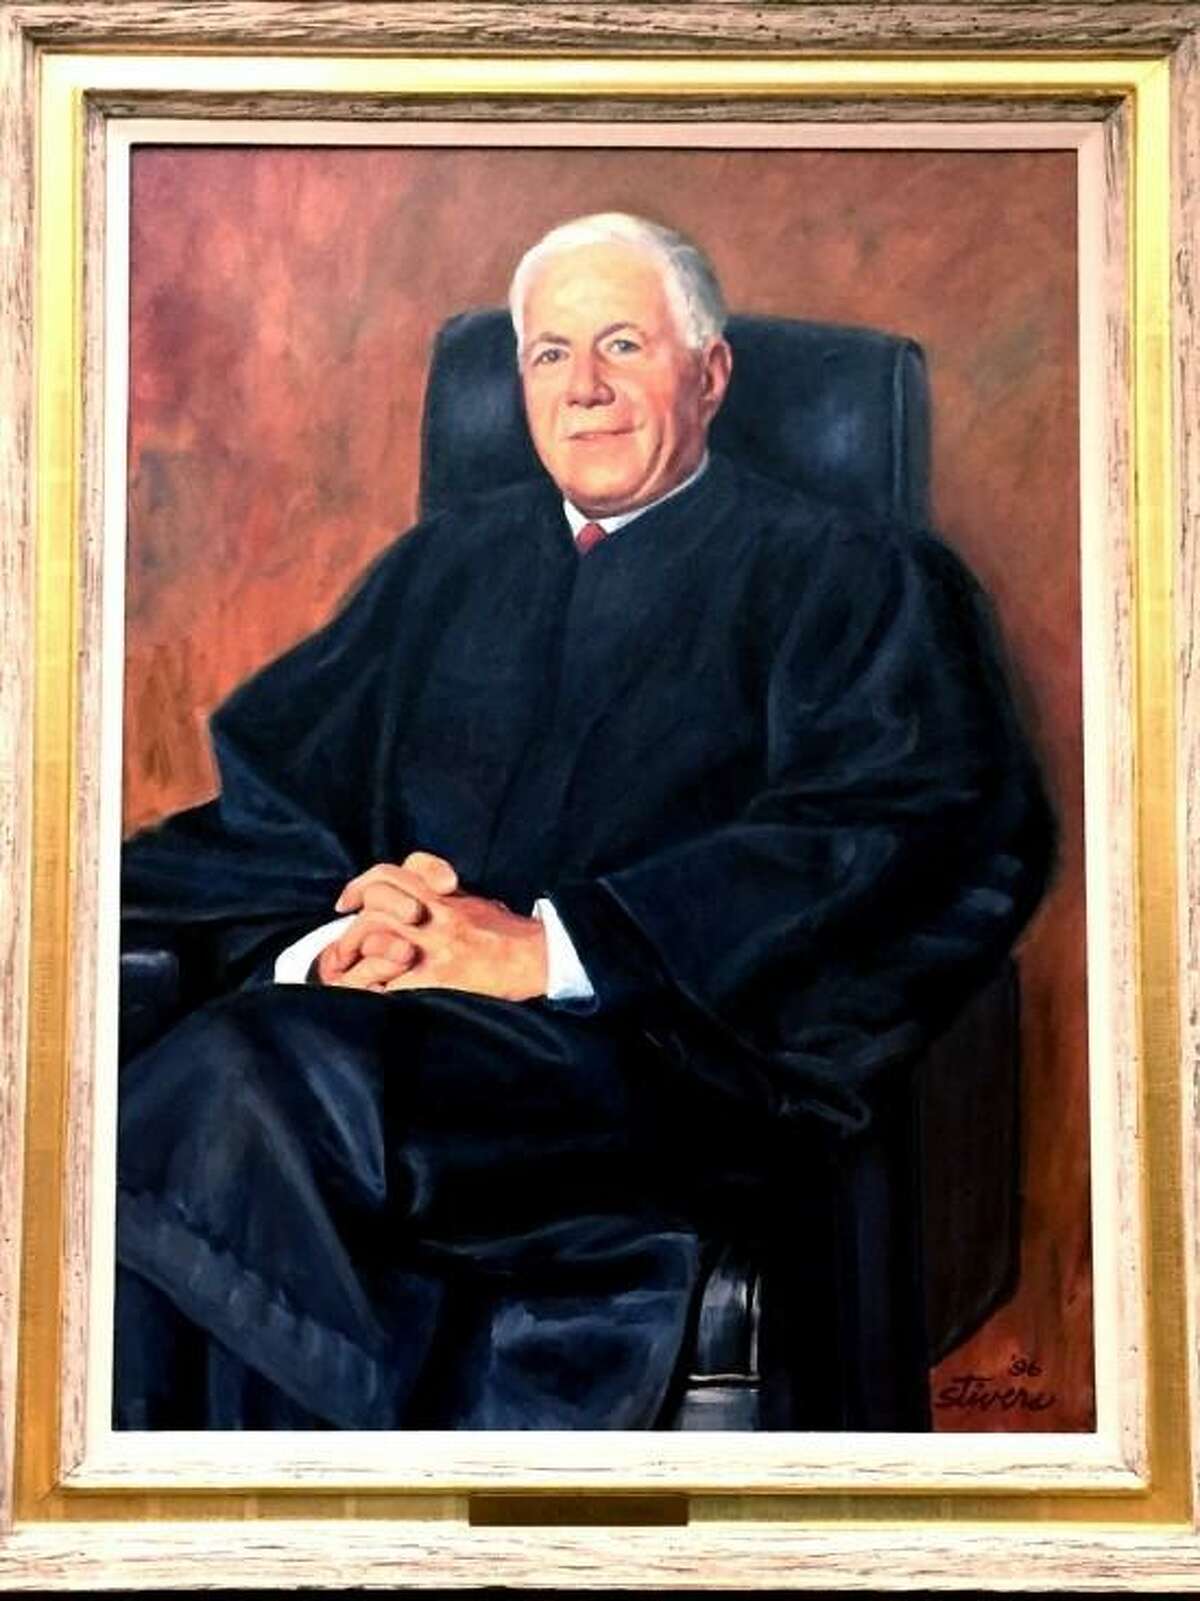 A portrait of Judge Morton Riefberg that hangs inside the Danbury Superior Court on White Street.